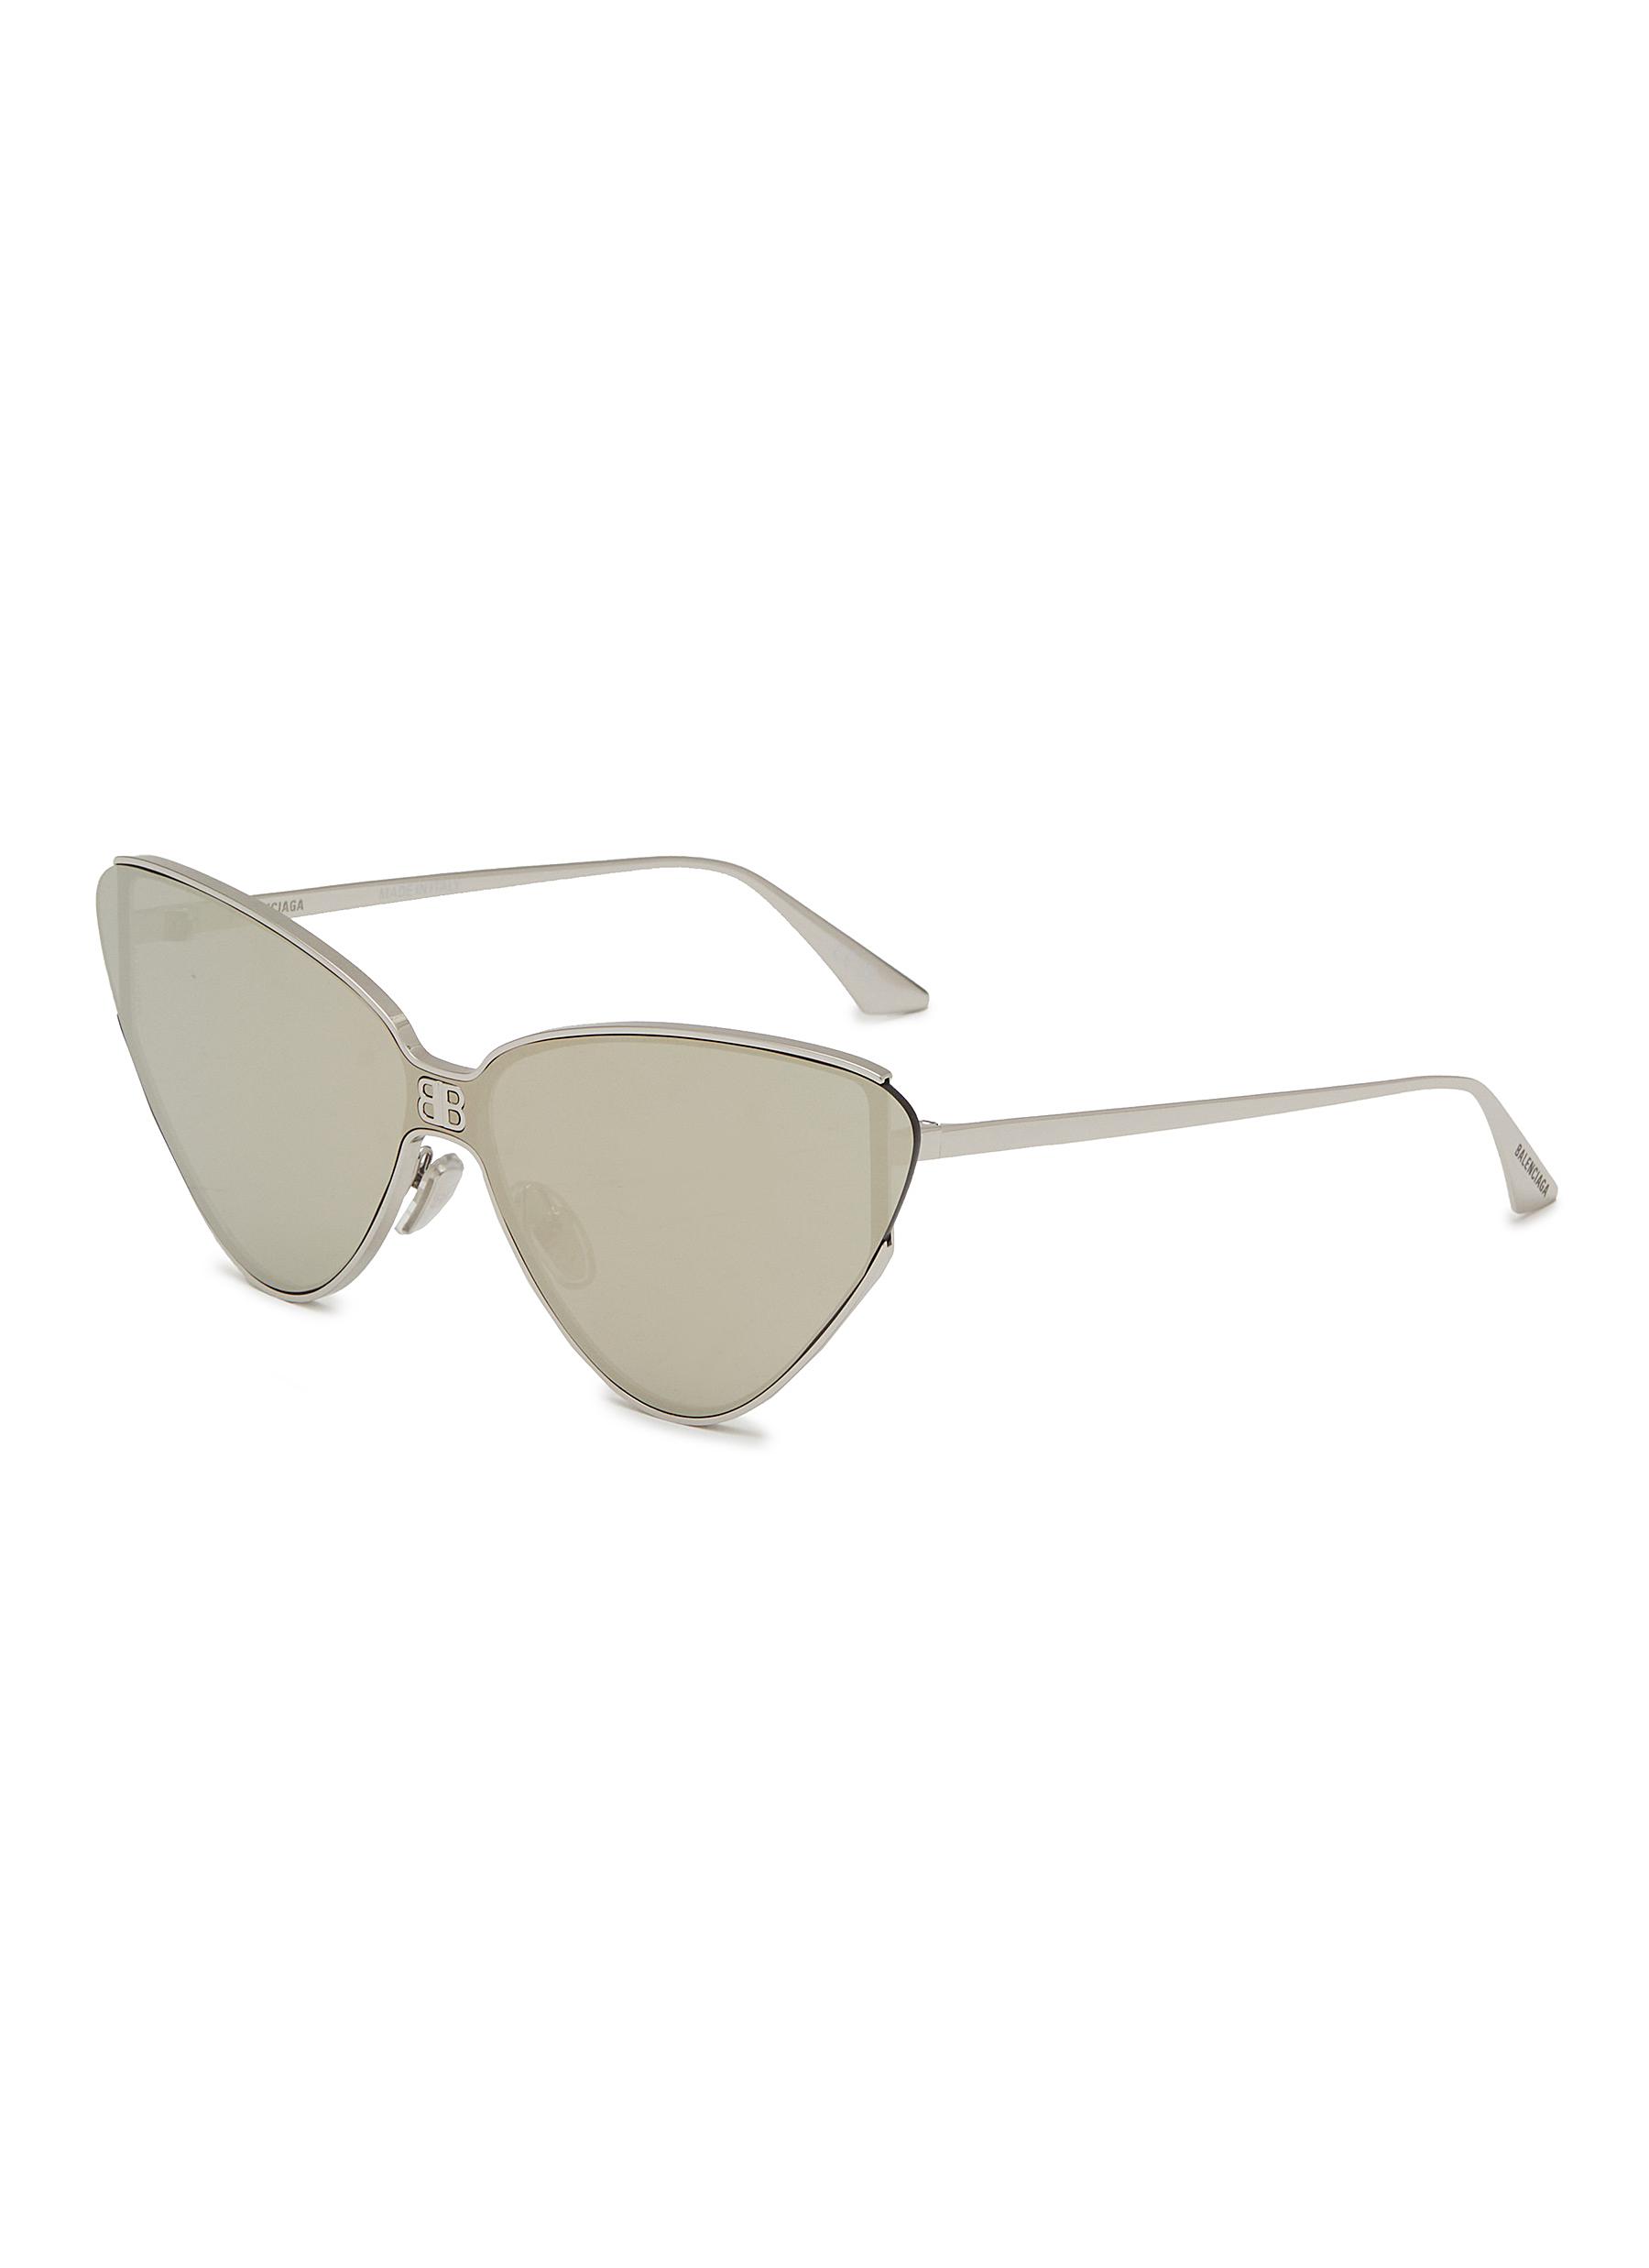 Balenciaga Limited Edition Rhinestone Zebra Printed Cat-eye Sunglasses  (Sunglasses,Cat Eye) IFCHIC.COM